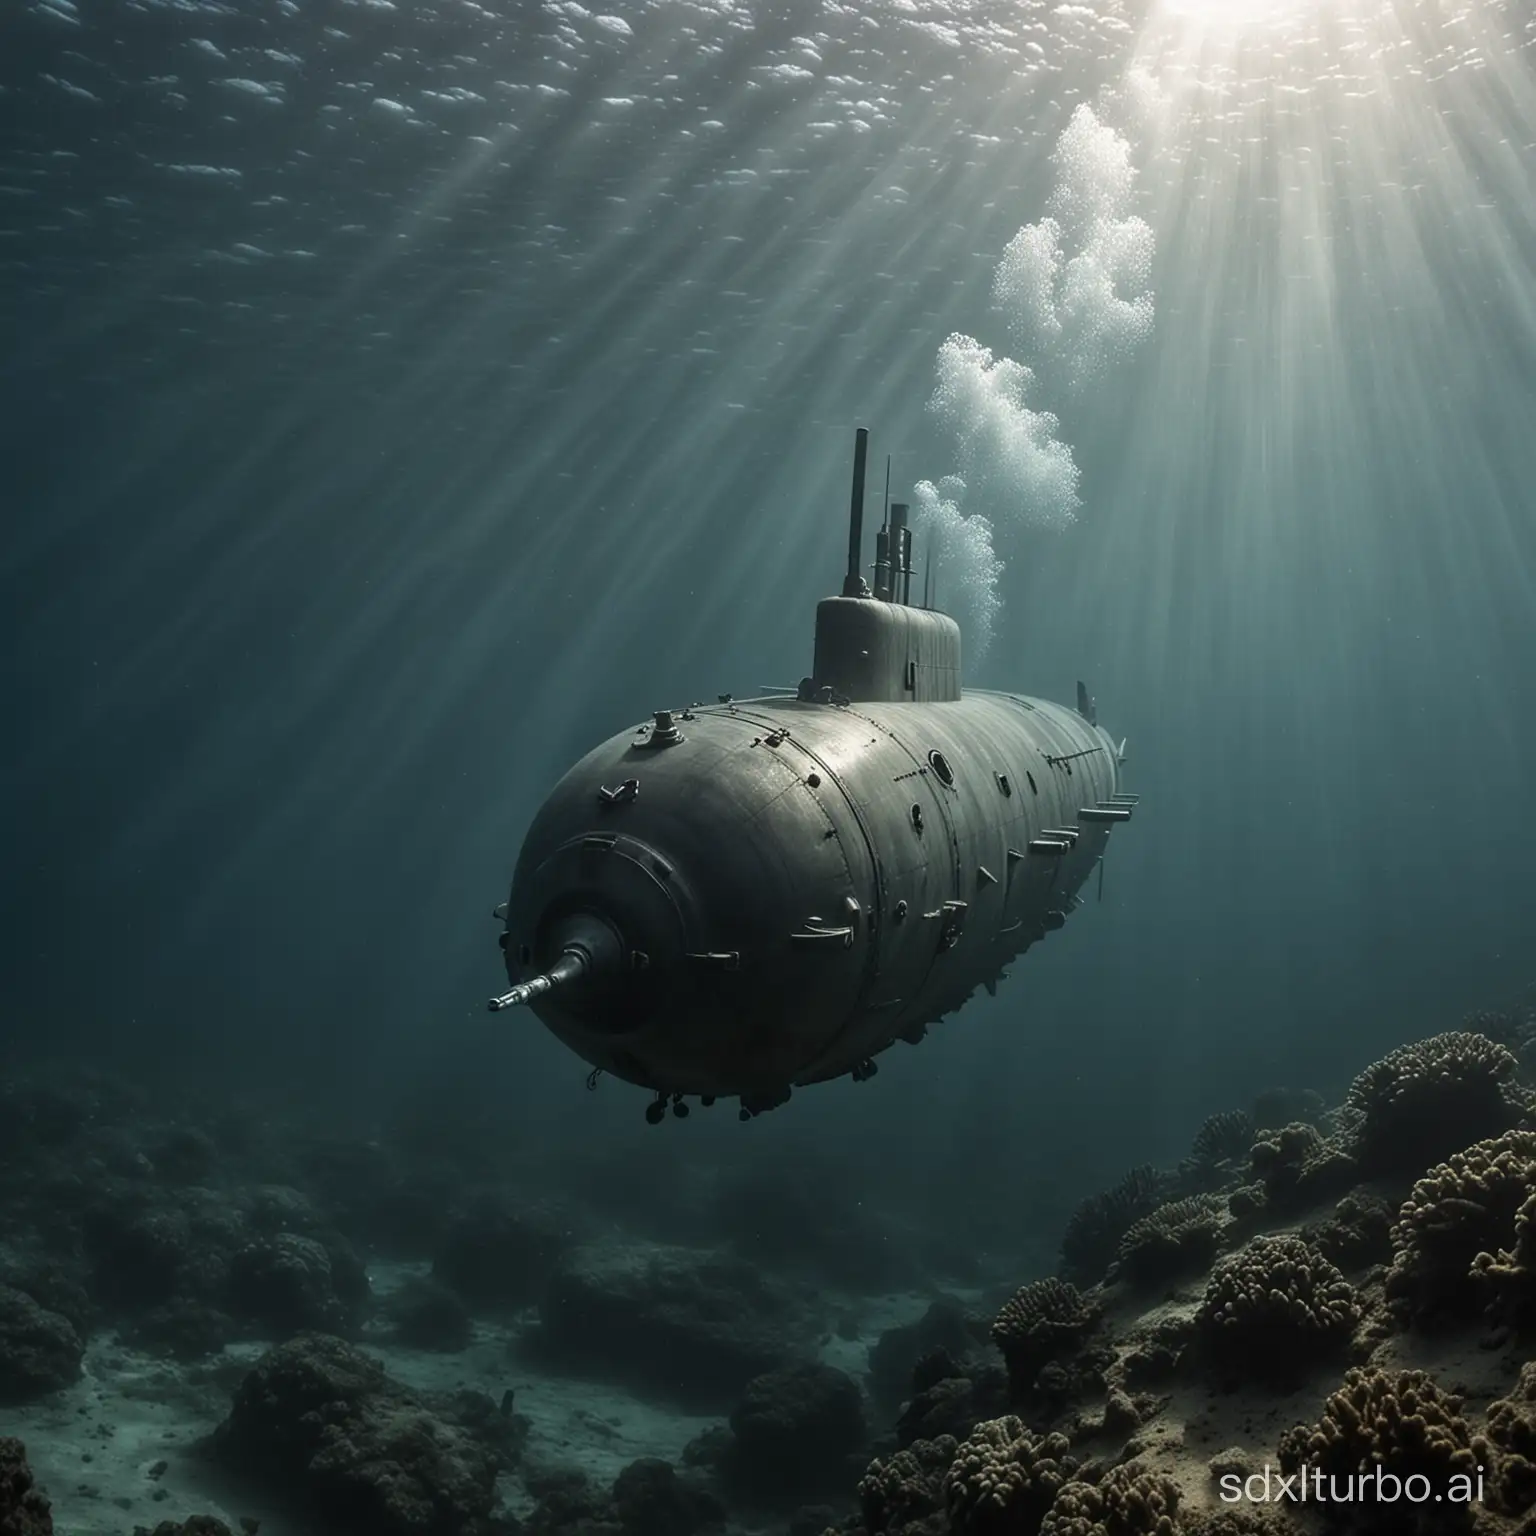 The submarine advances underwater